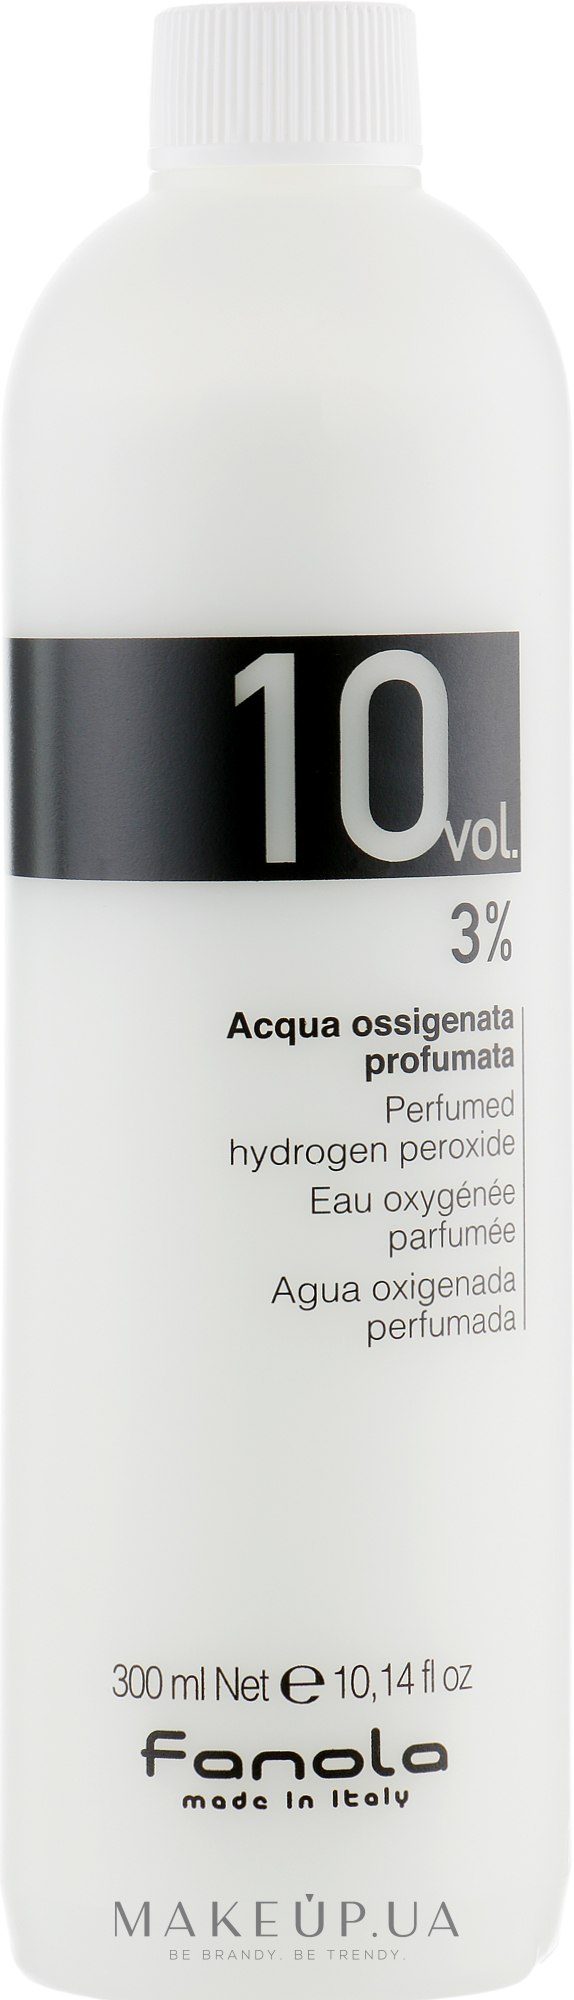 Окислитель 10 vol 3% - Fanola Perfumed Hydrogen Peroxide Hair Oxidant  — фото 300ml